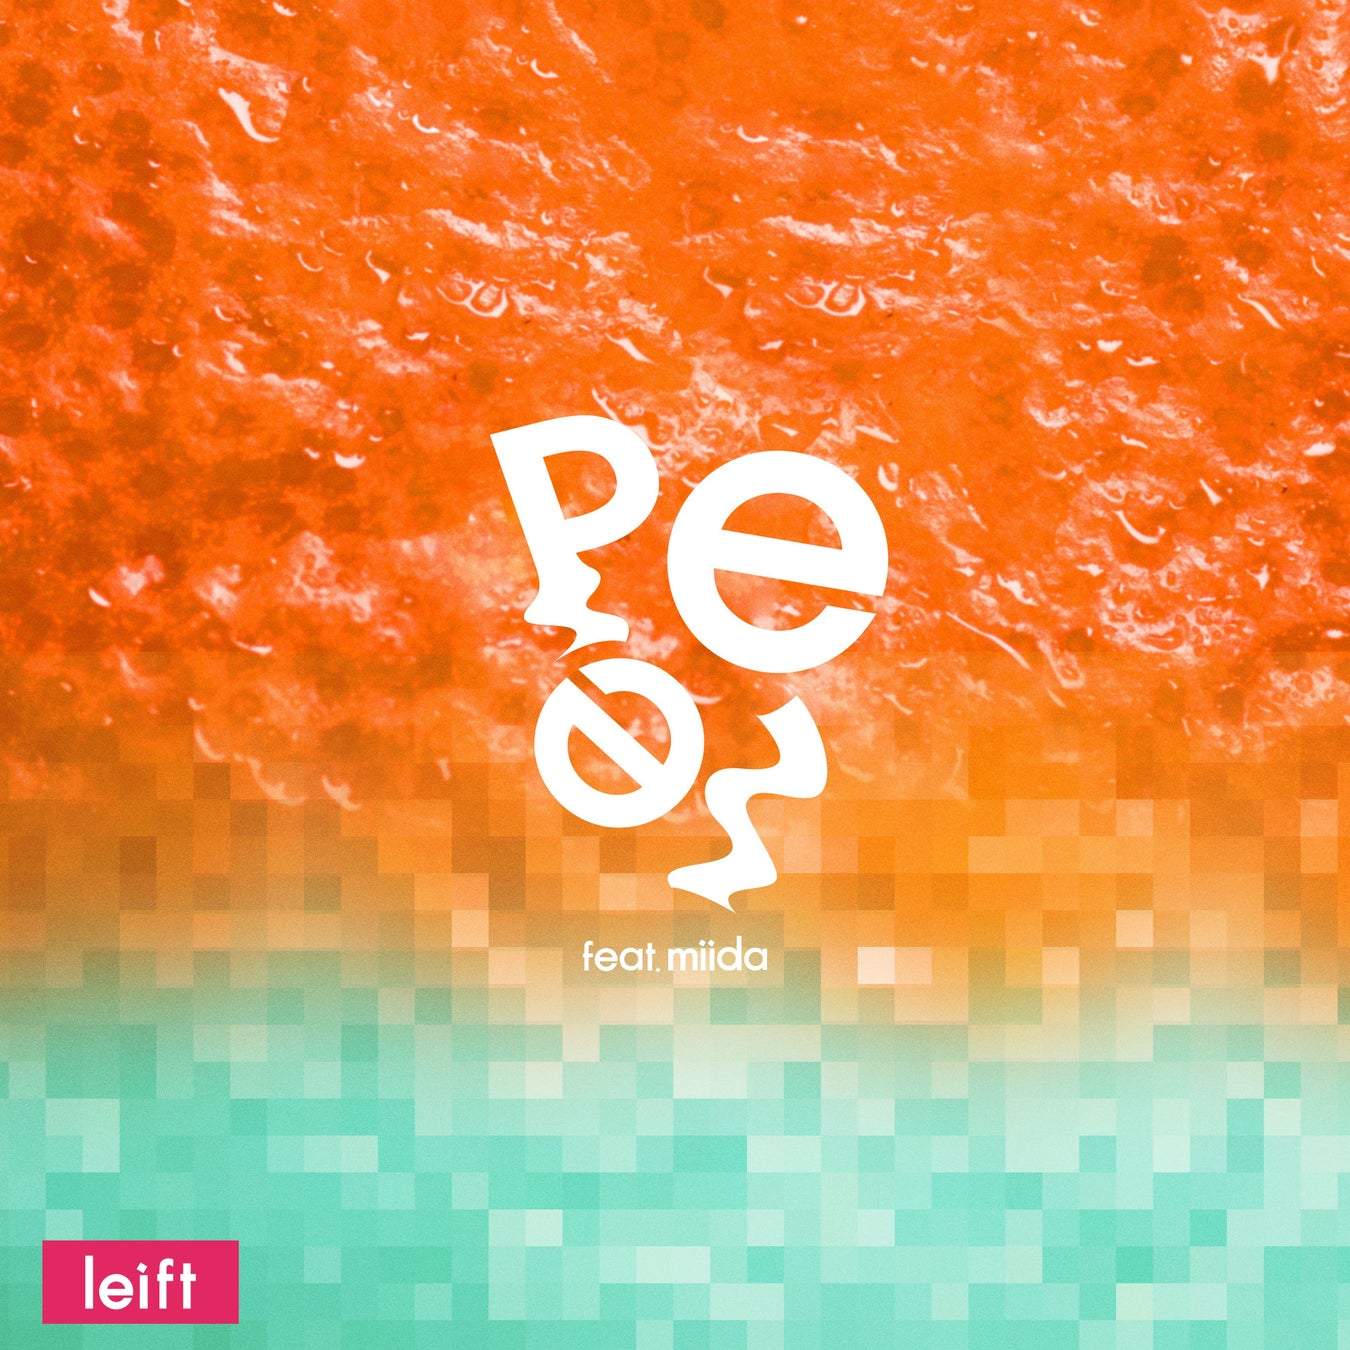 leiftが初のコラボレーション楽曲『Peel』をリリース。第一弾はmiidaを迎えた晩夏のチル・シティポップ。マリオット系列のホテルライブで初披露し、ハイレゾ音源でのNFTバージョンもリリース。のサブ画像1